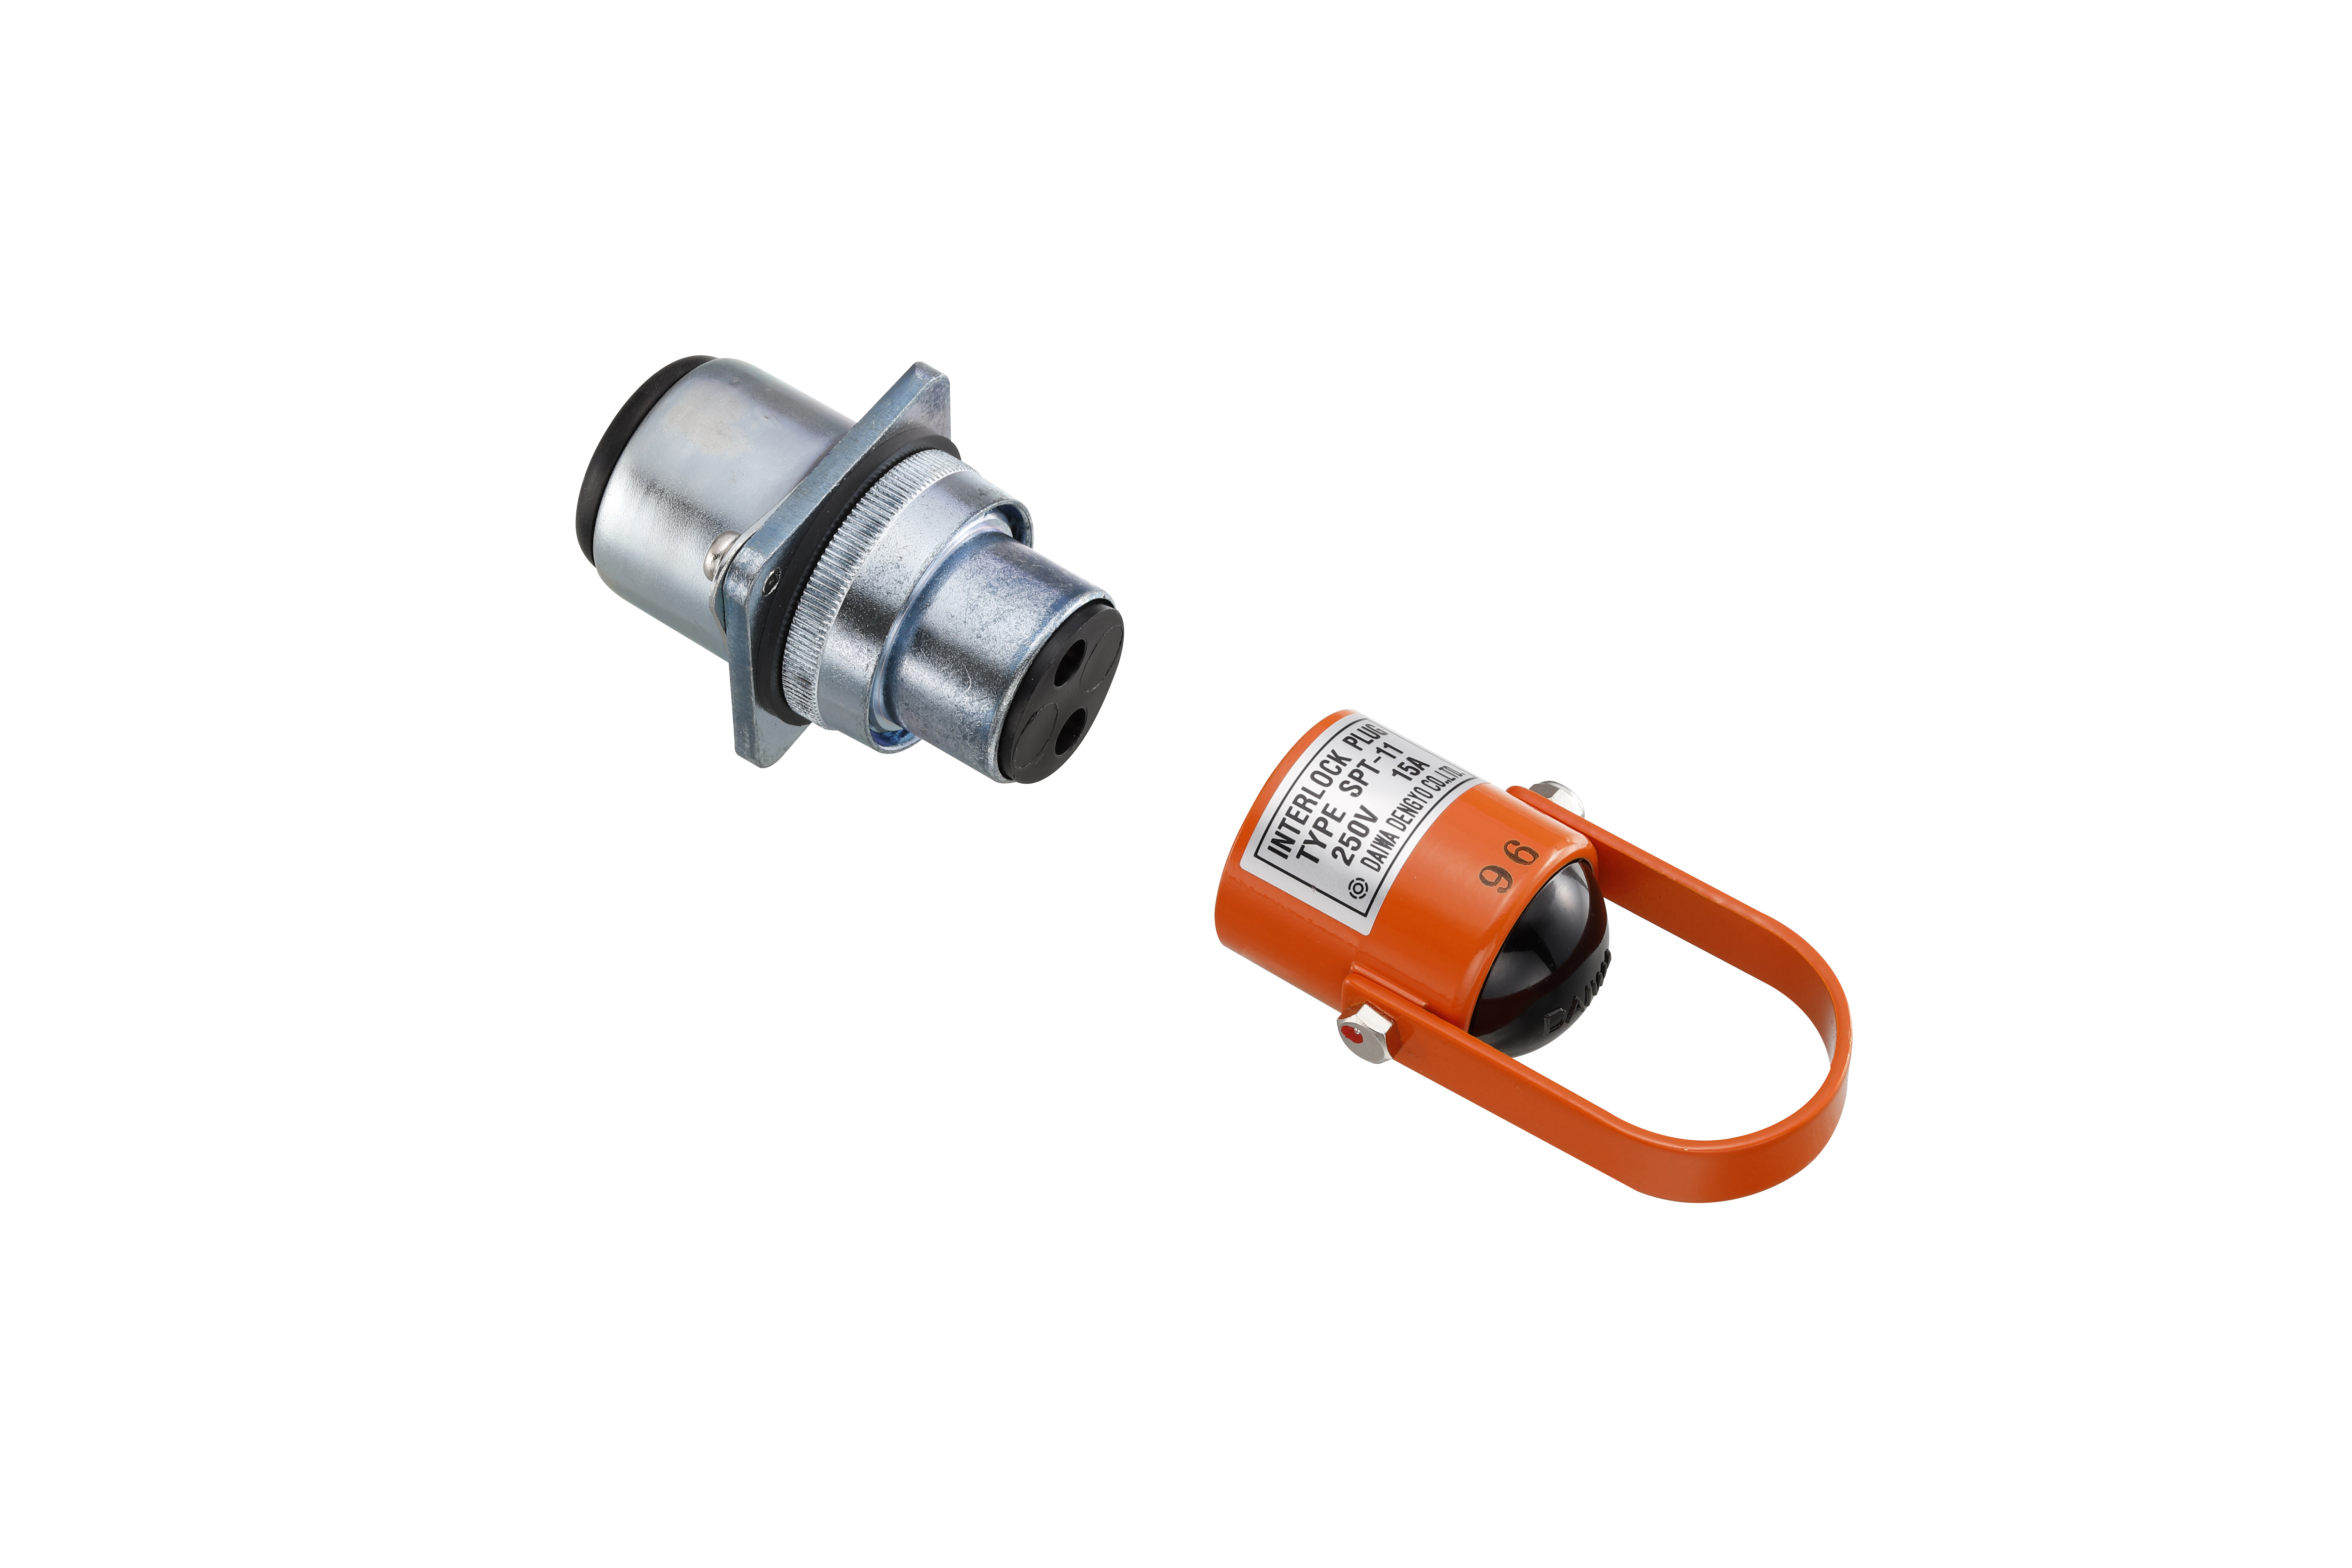 Interlock Plug (SPT-22-G) 